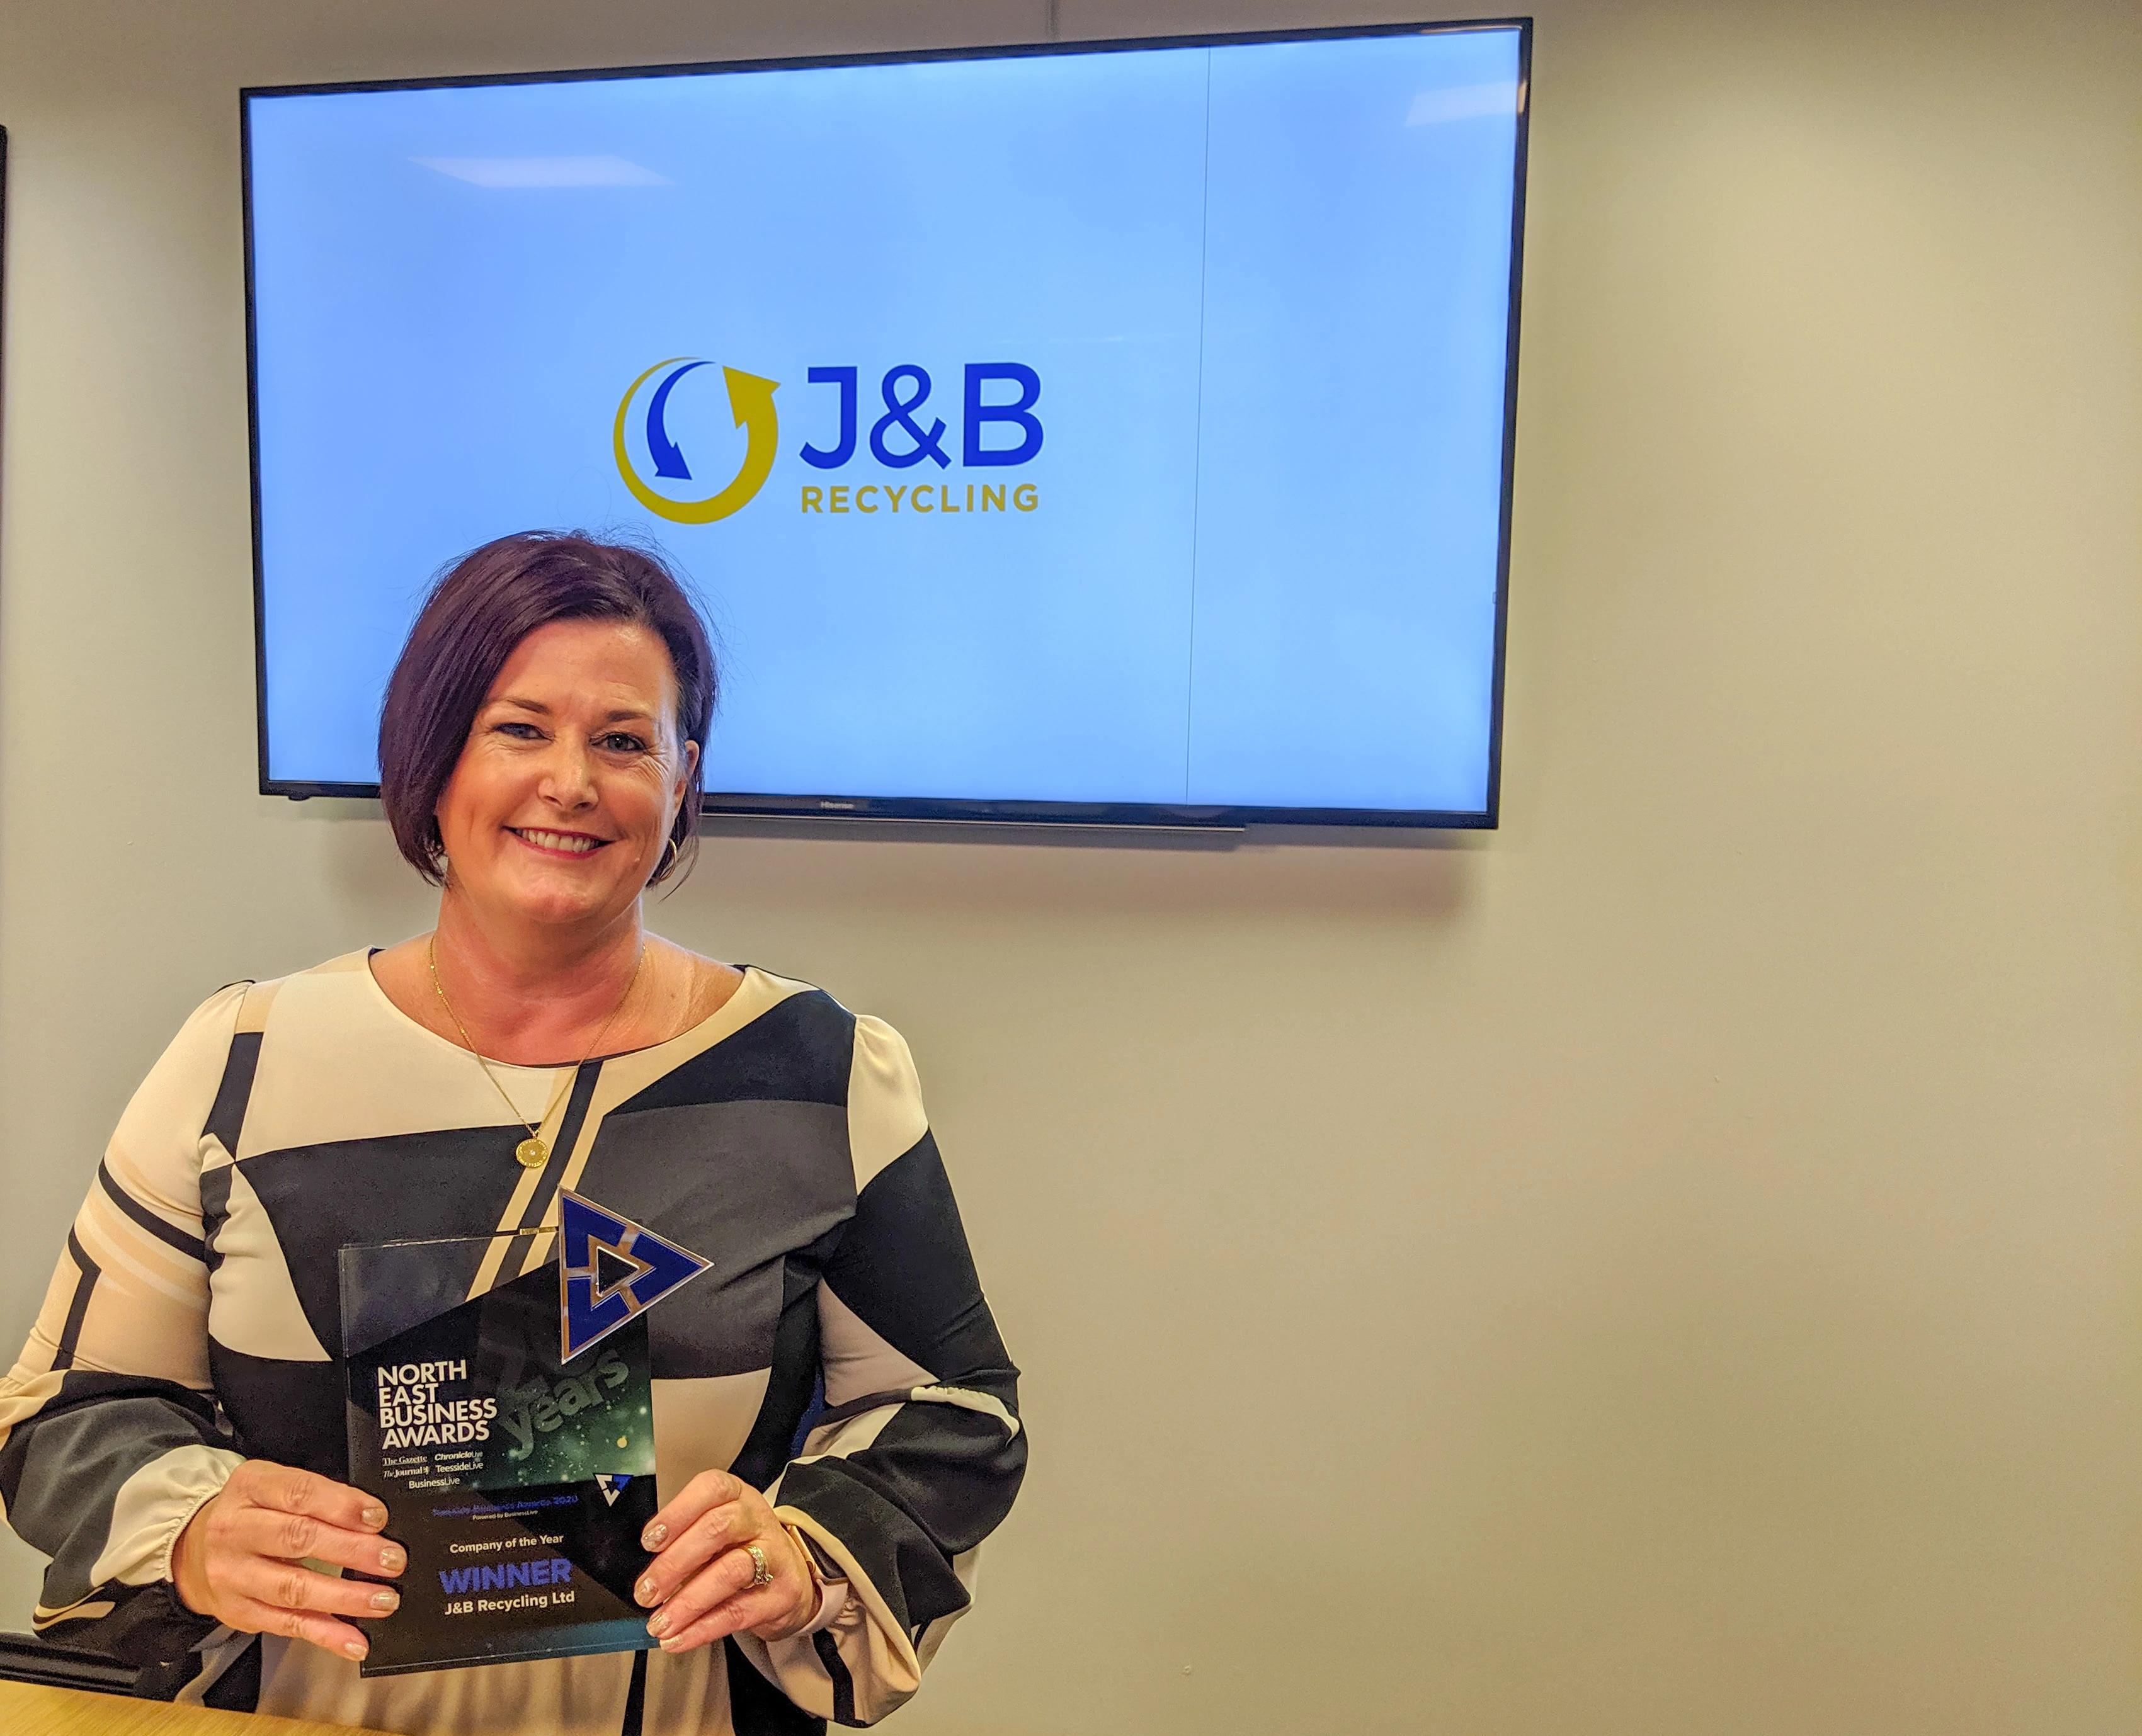 J&B Recycling's CEO, Vikki Jackson-Smith, holding the Teesside Company of the Year award.